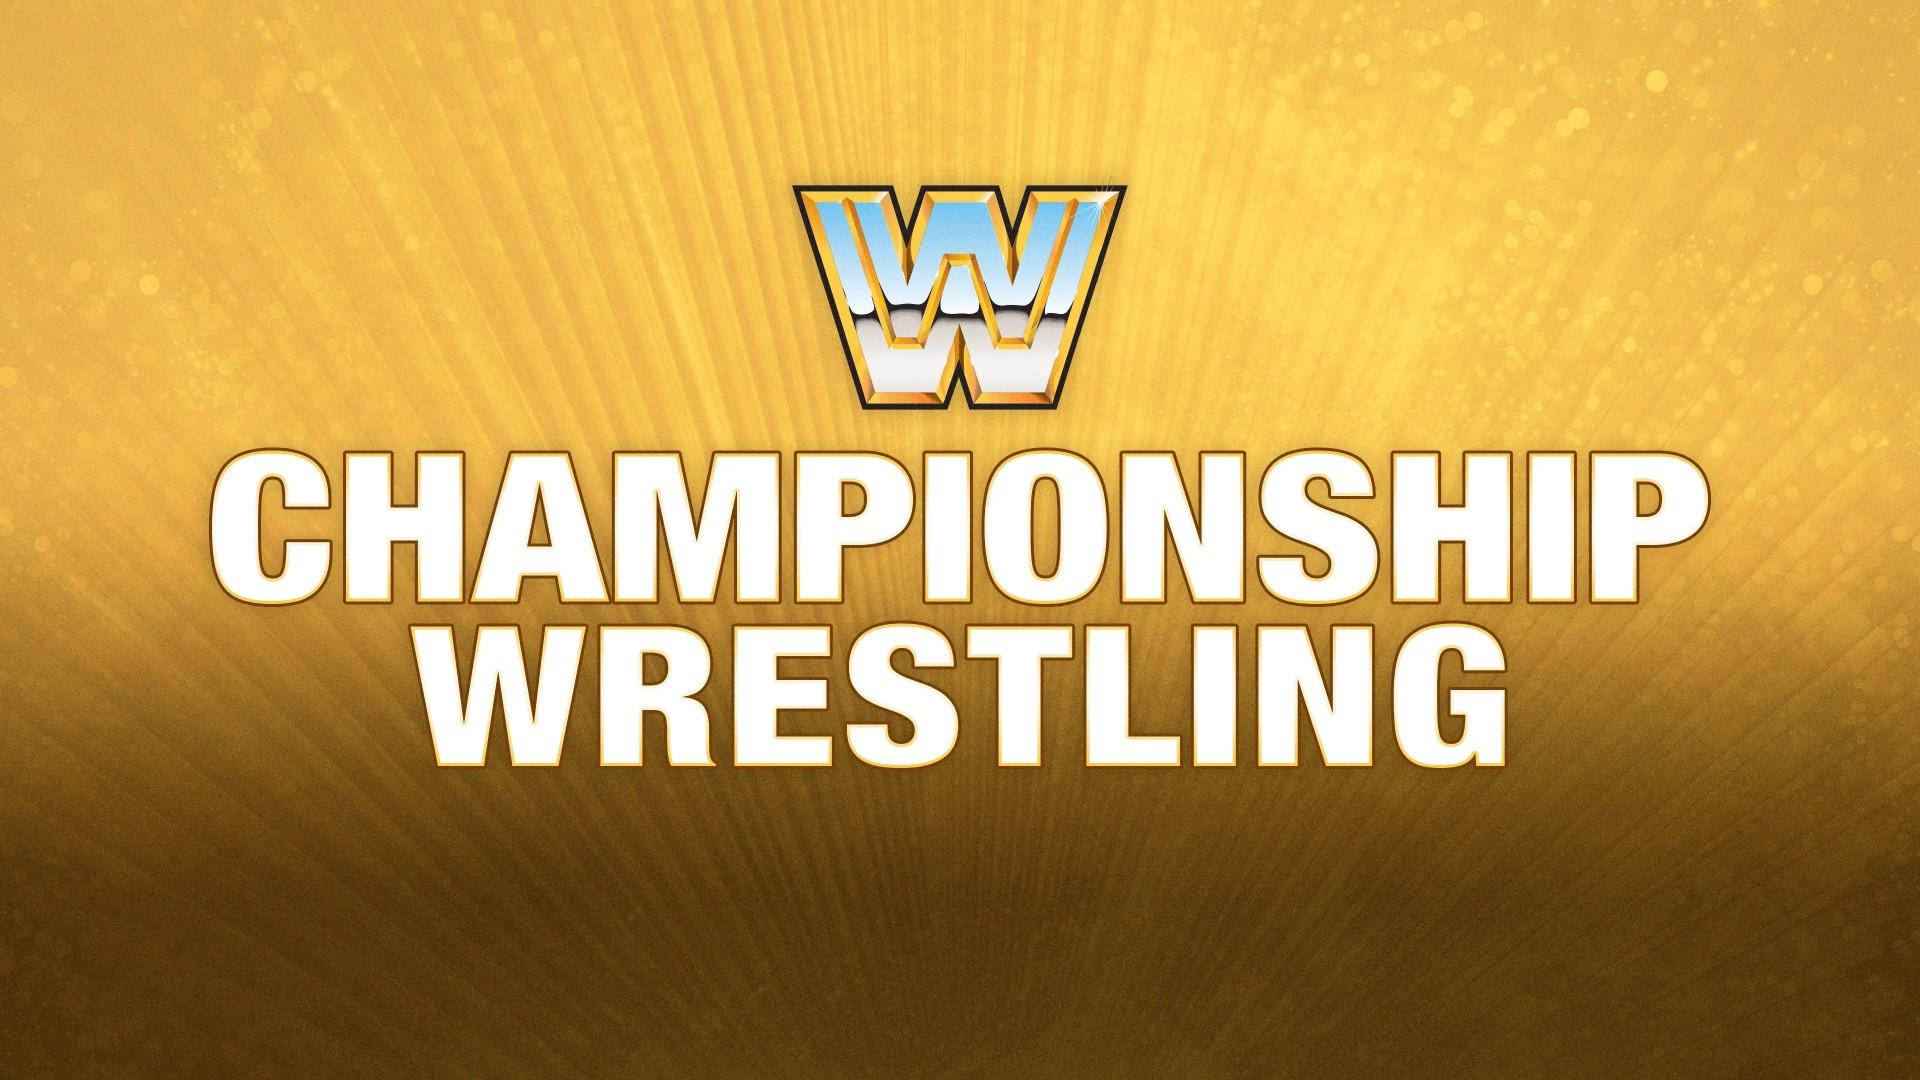 WWF Championship Wrestling